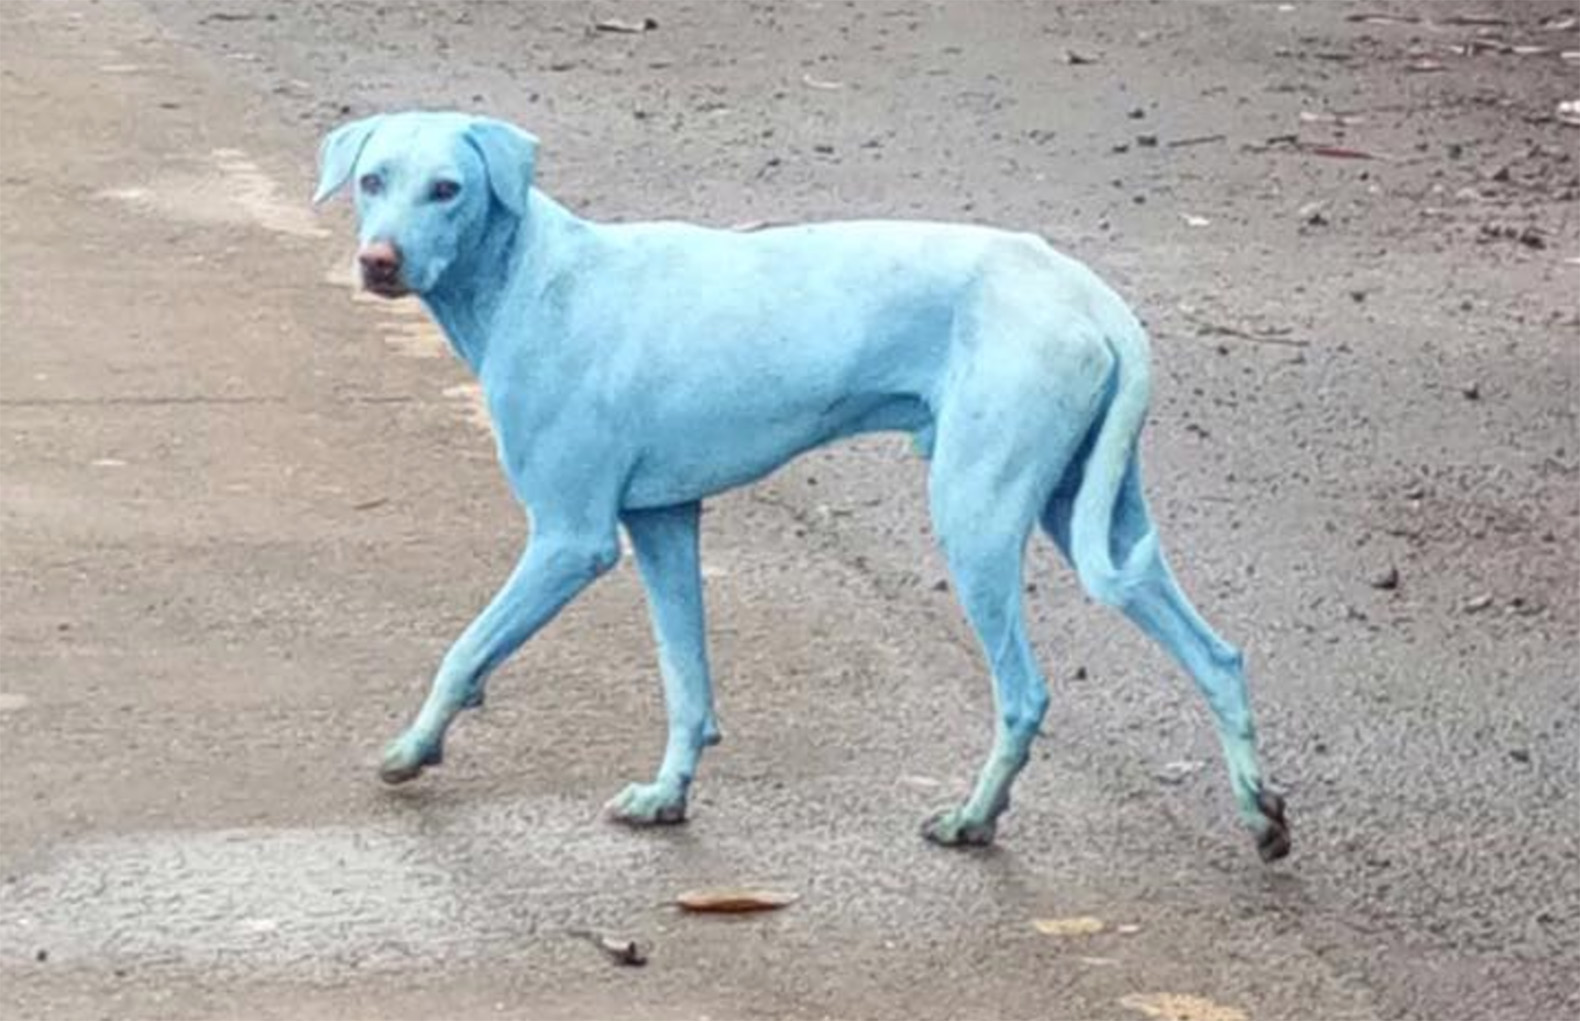 Câinii vagabonzi din India devin albaştri